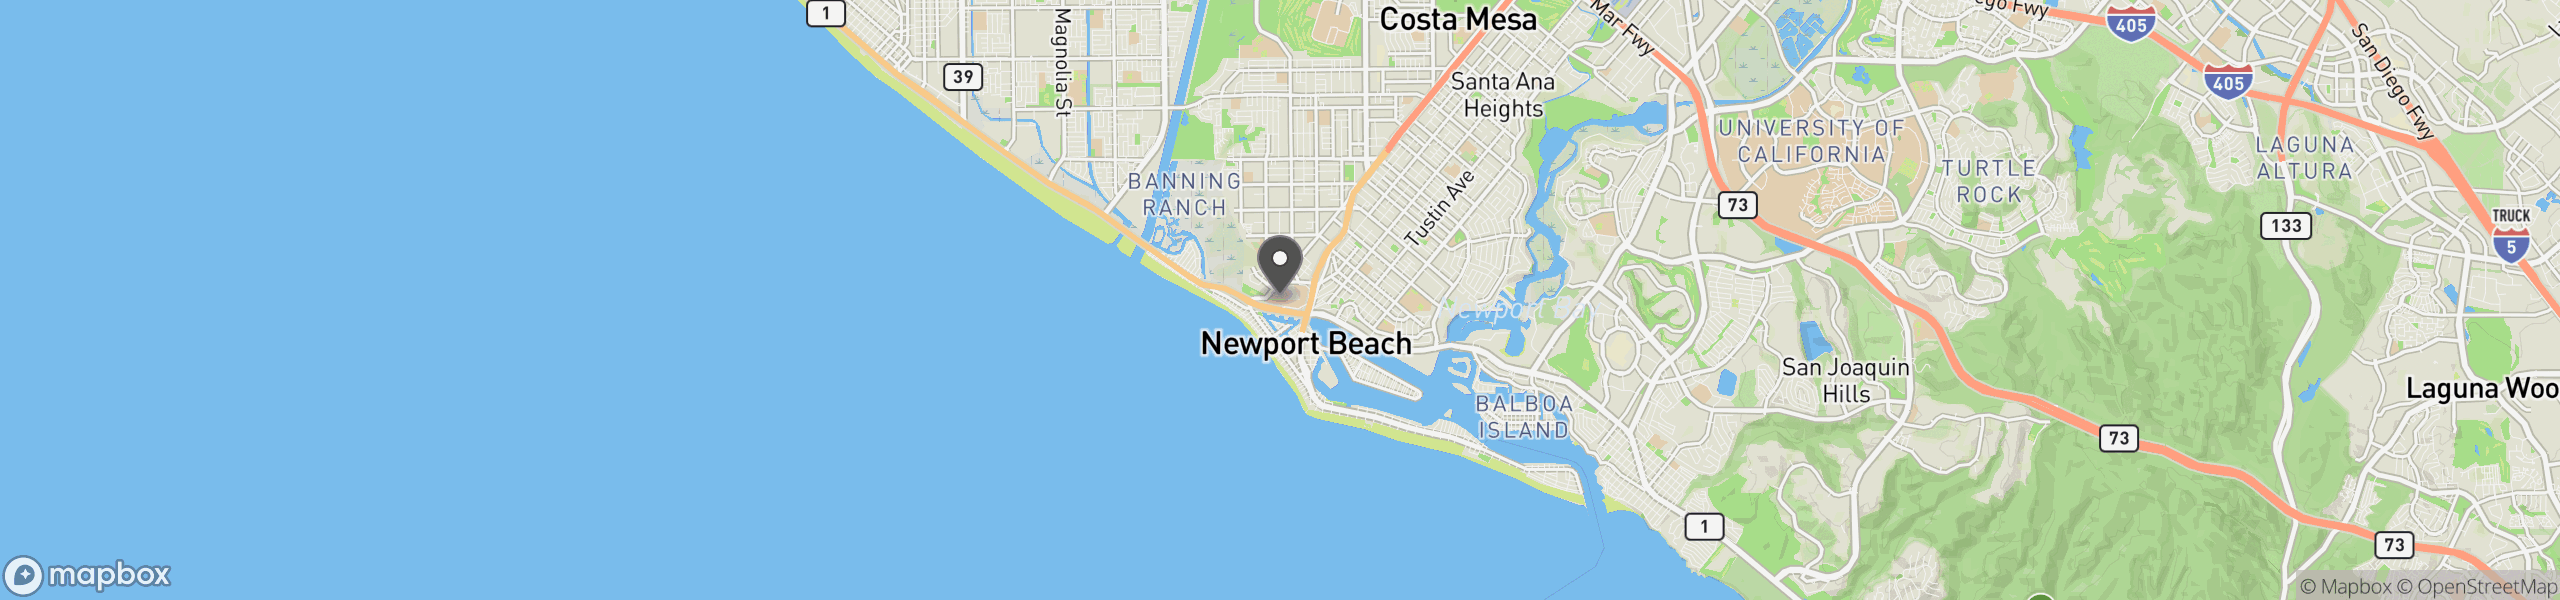 Newport Beach, CA 92663